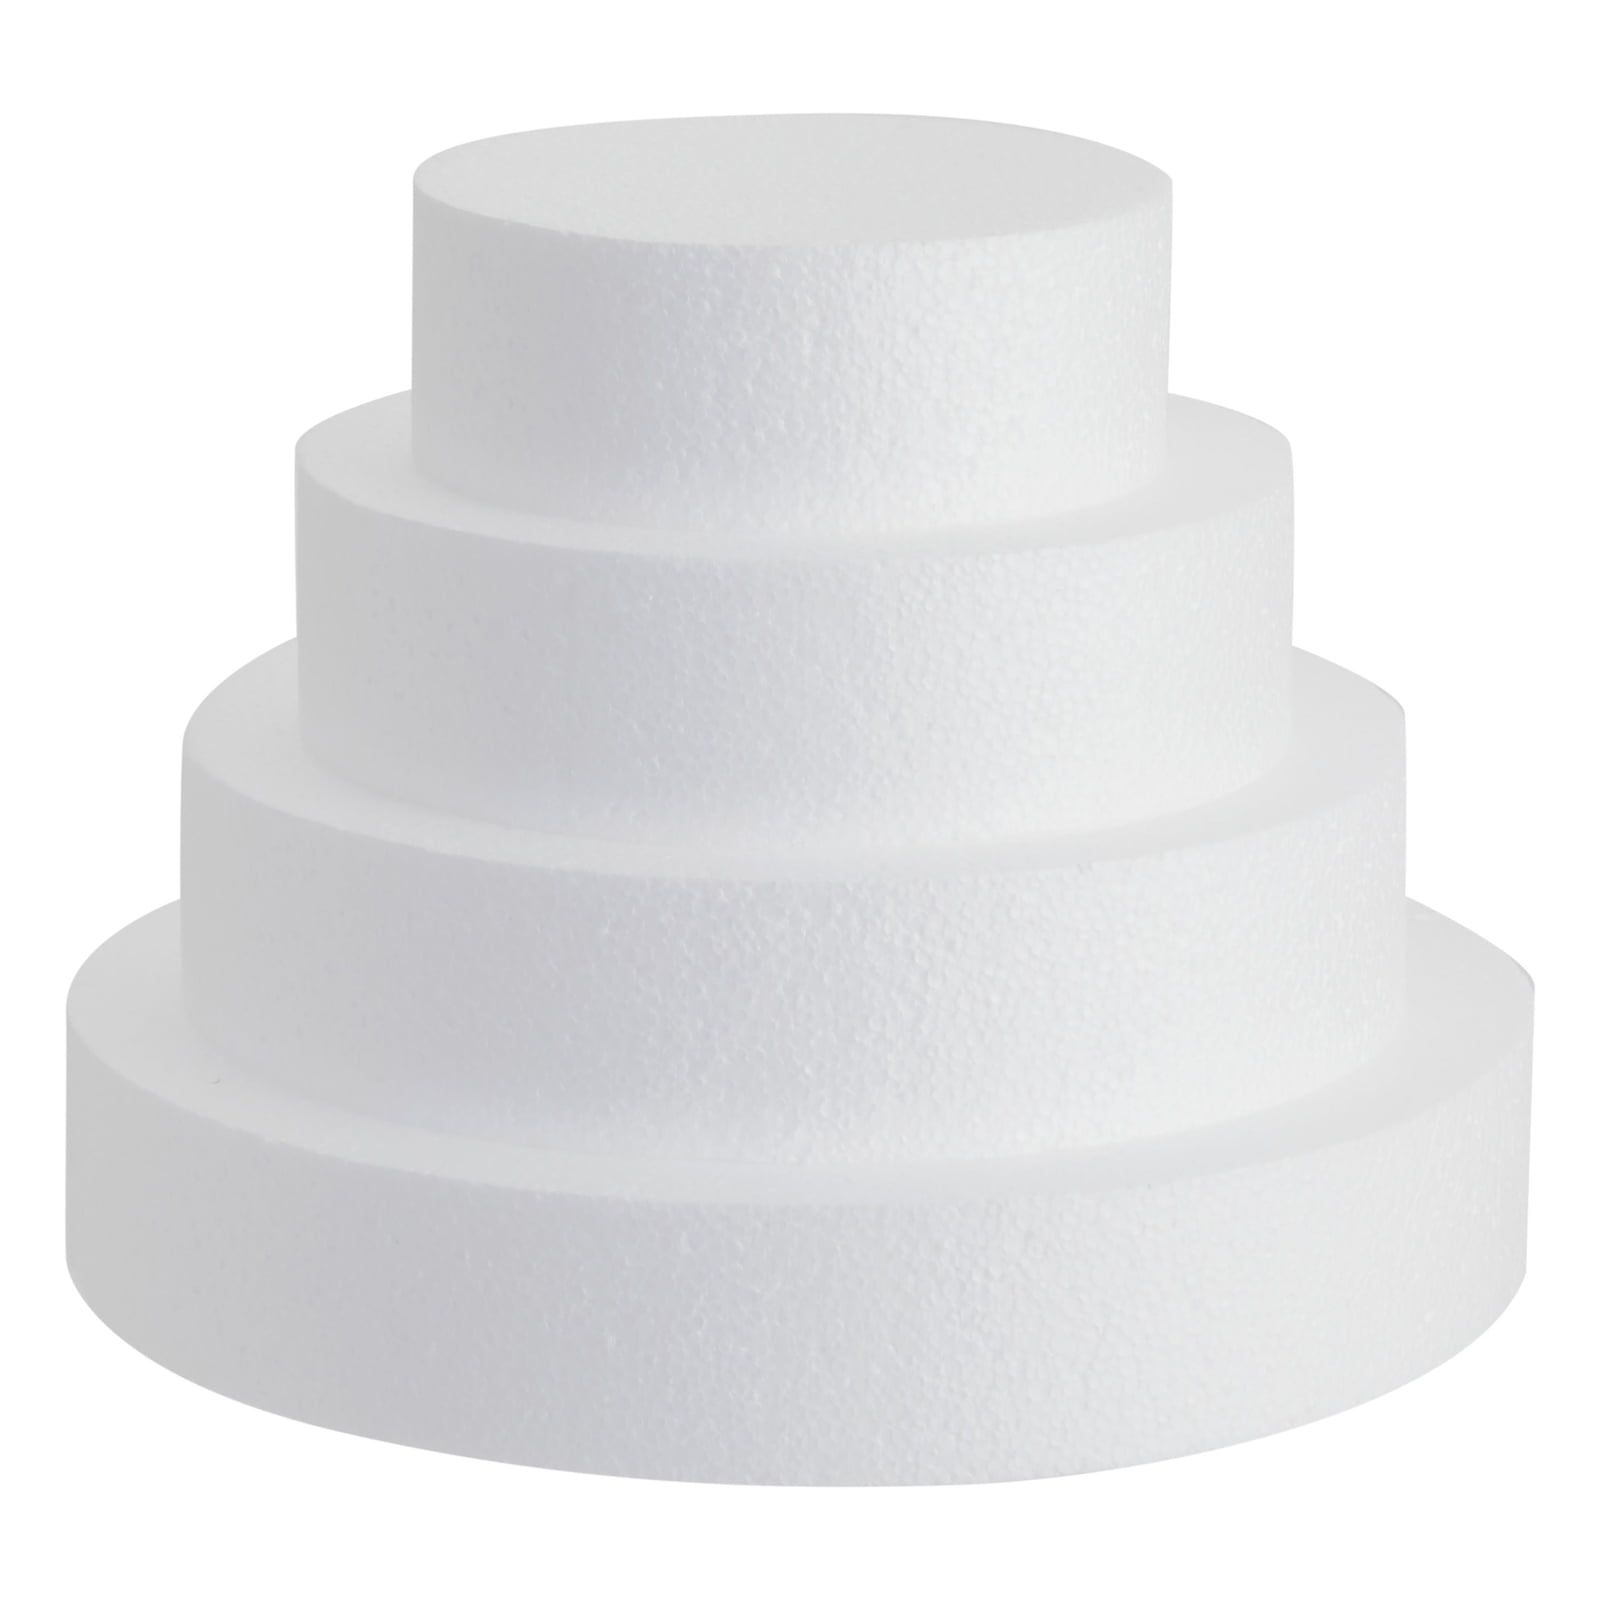 Dummy / fake 3 tier white wedding cake [rental] – Your DIY Project Rental